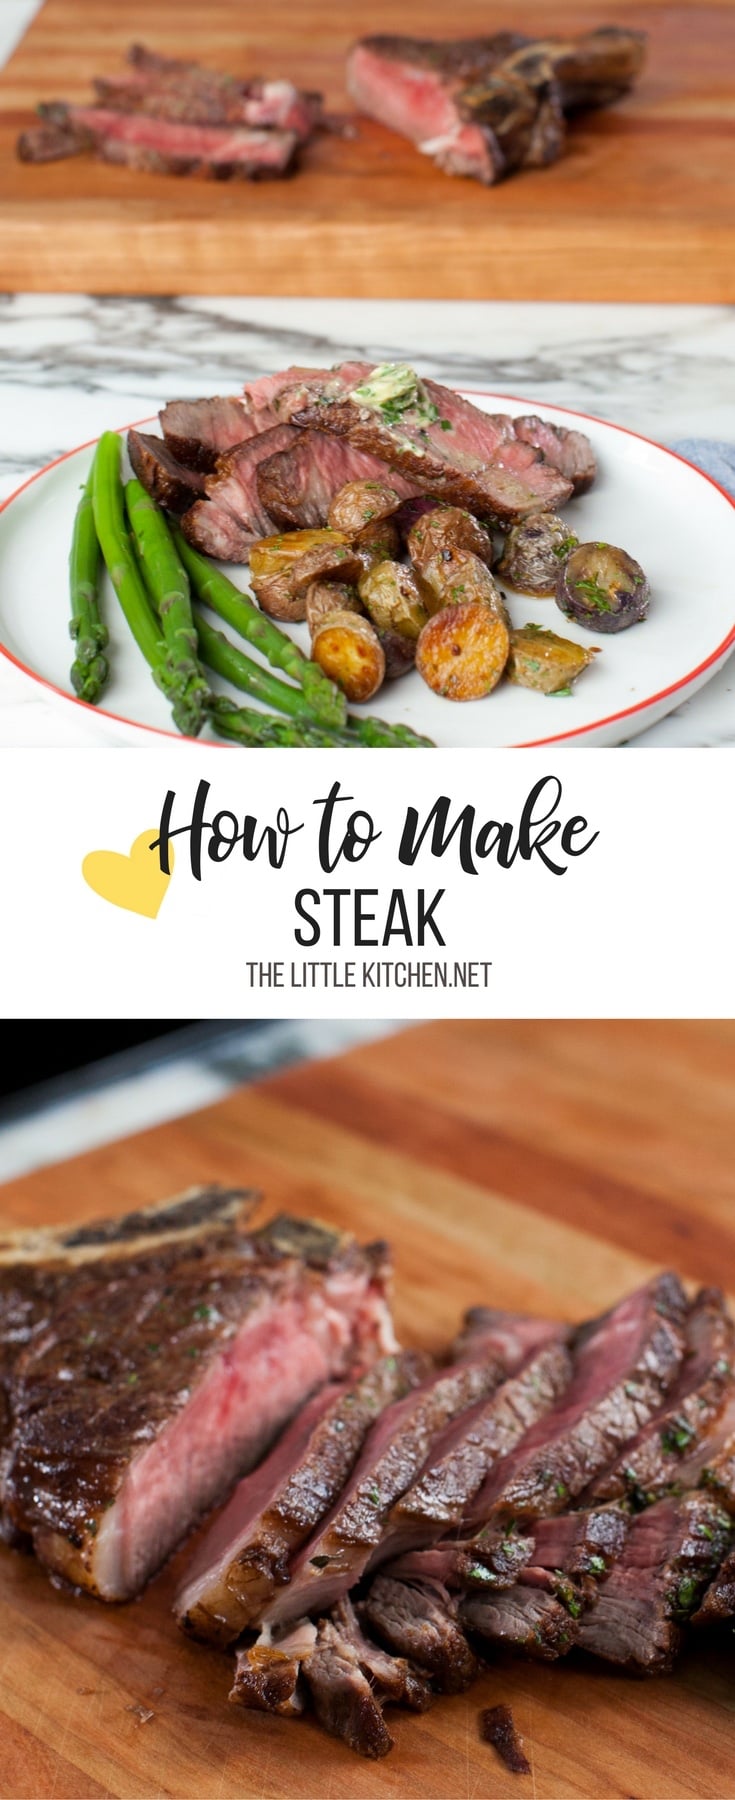 How to Make Steak from thelittlekitchen.net